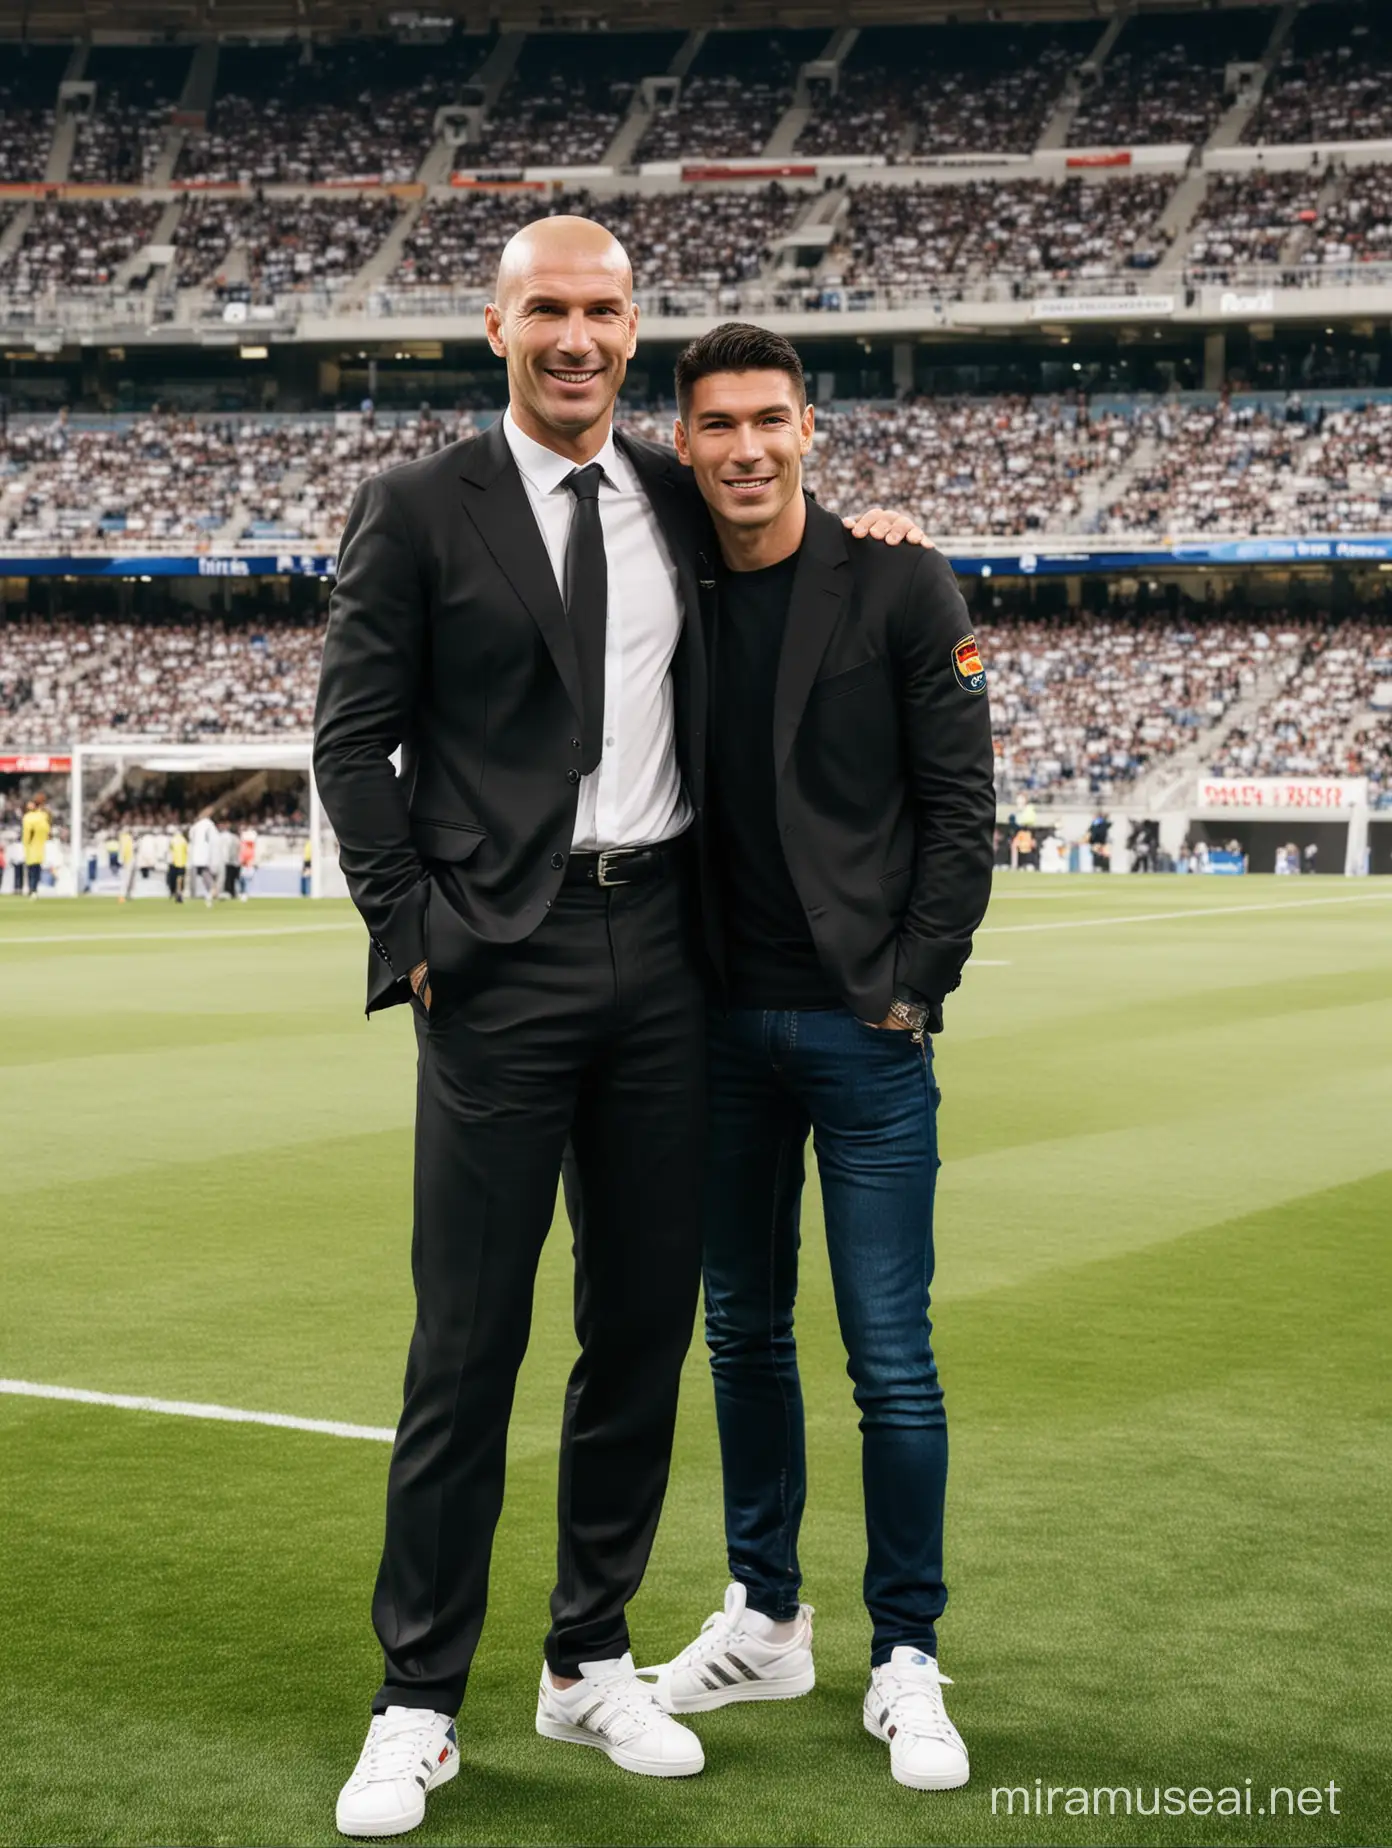 Zinédine Zidane pebakain setelan jas hitam berfoto dengan pria asia usia 30 tahun berambut pendek memakai jersey real madrid memakai celana jeans dan sepatu kets..latar belakang stadion real madrid 